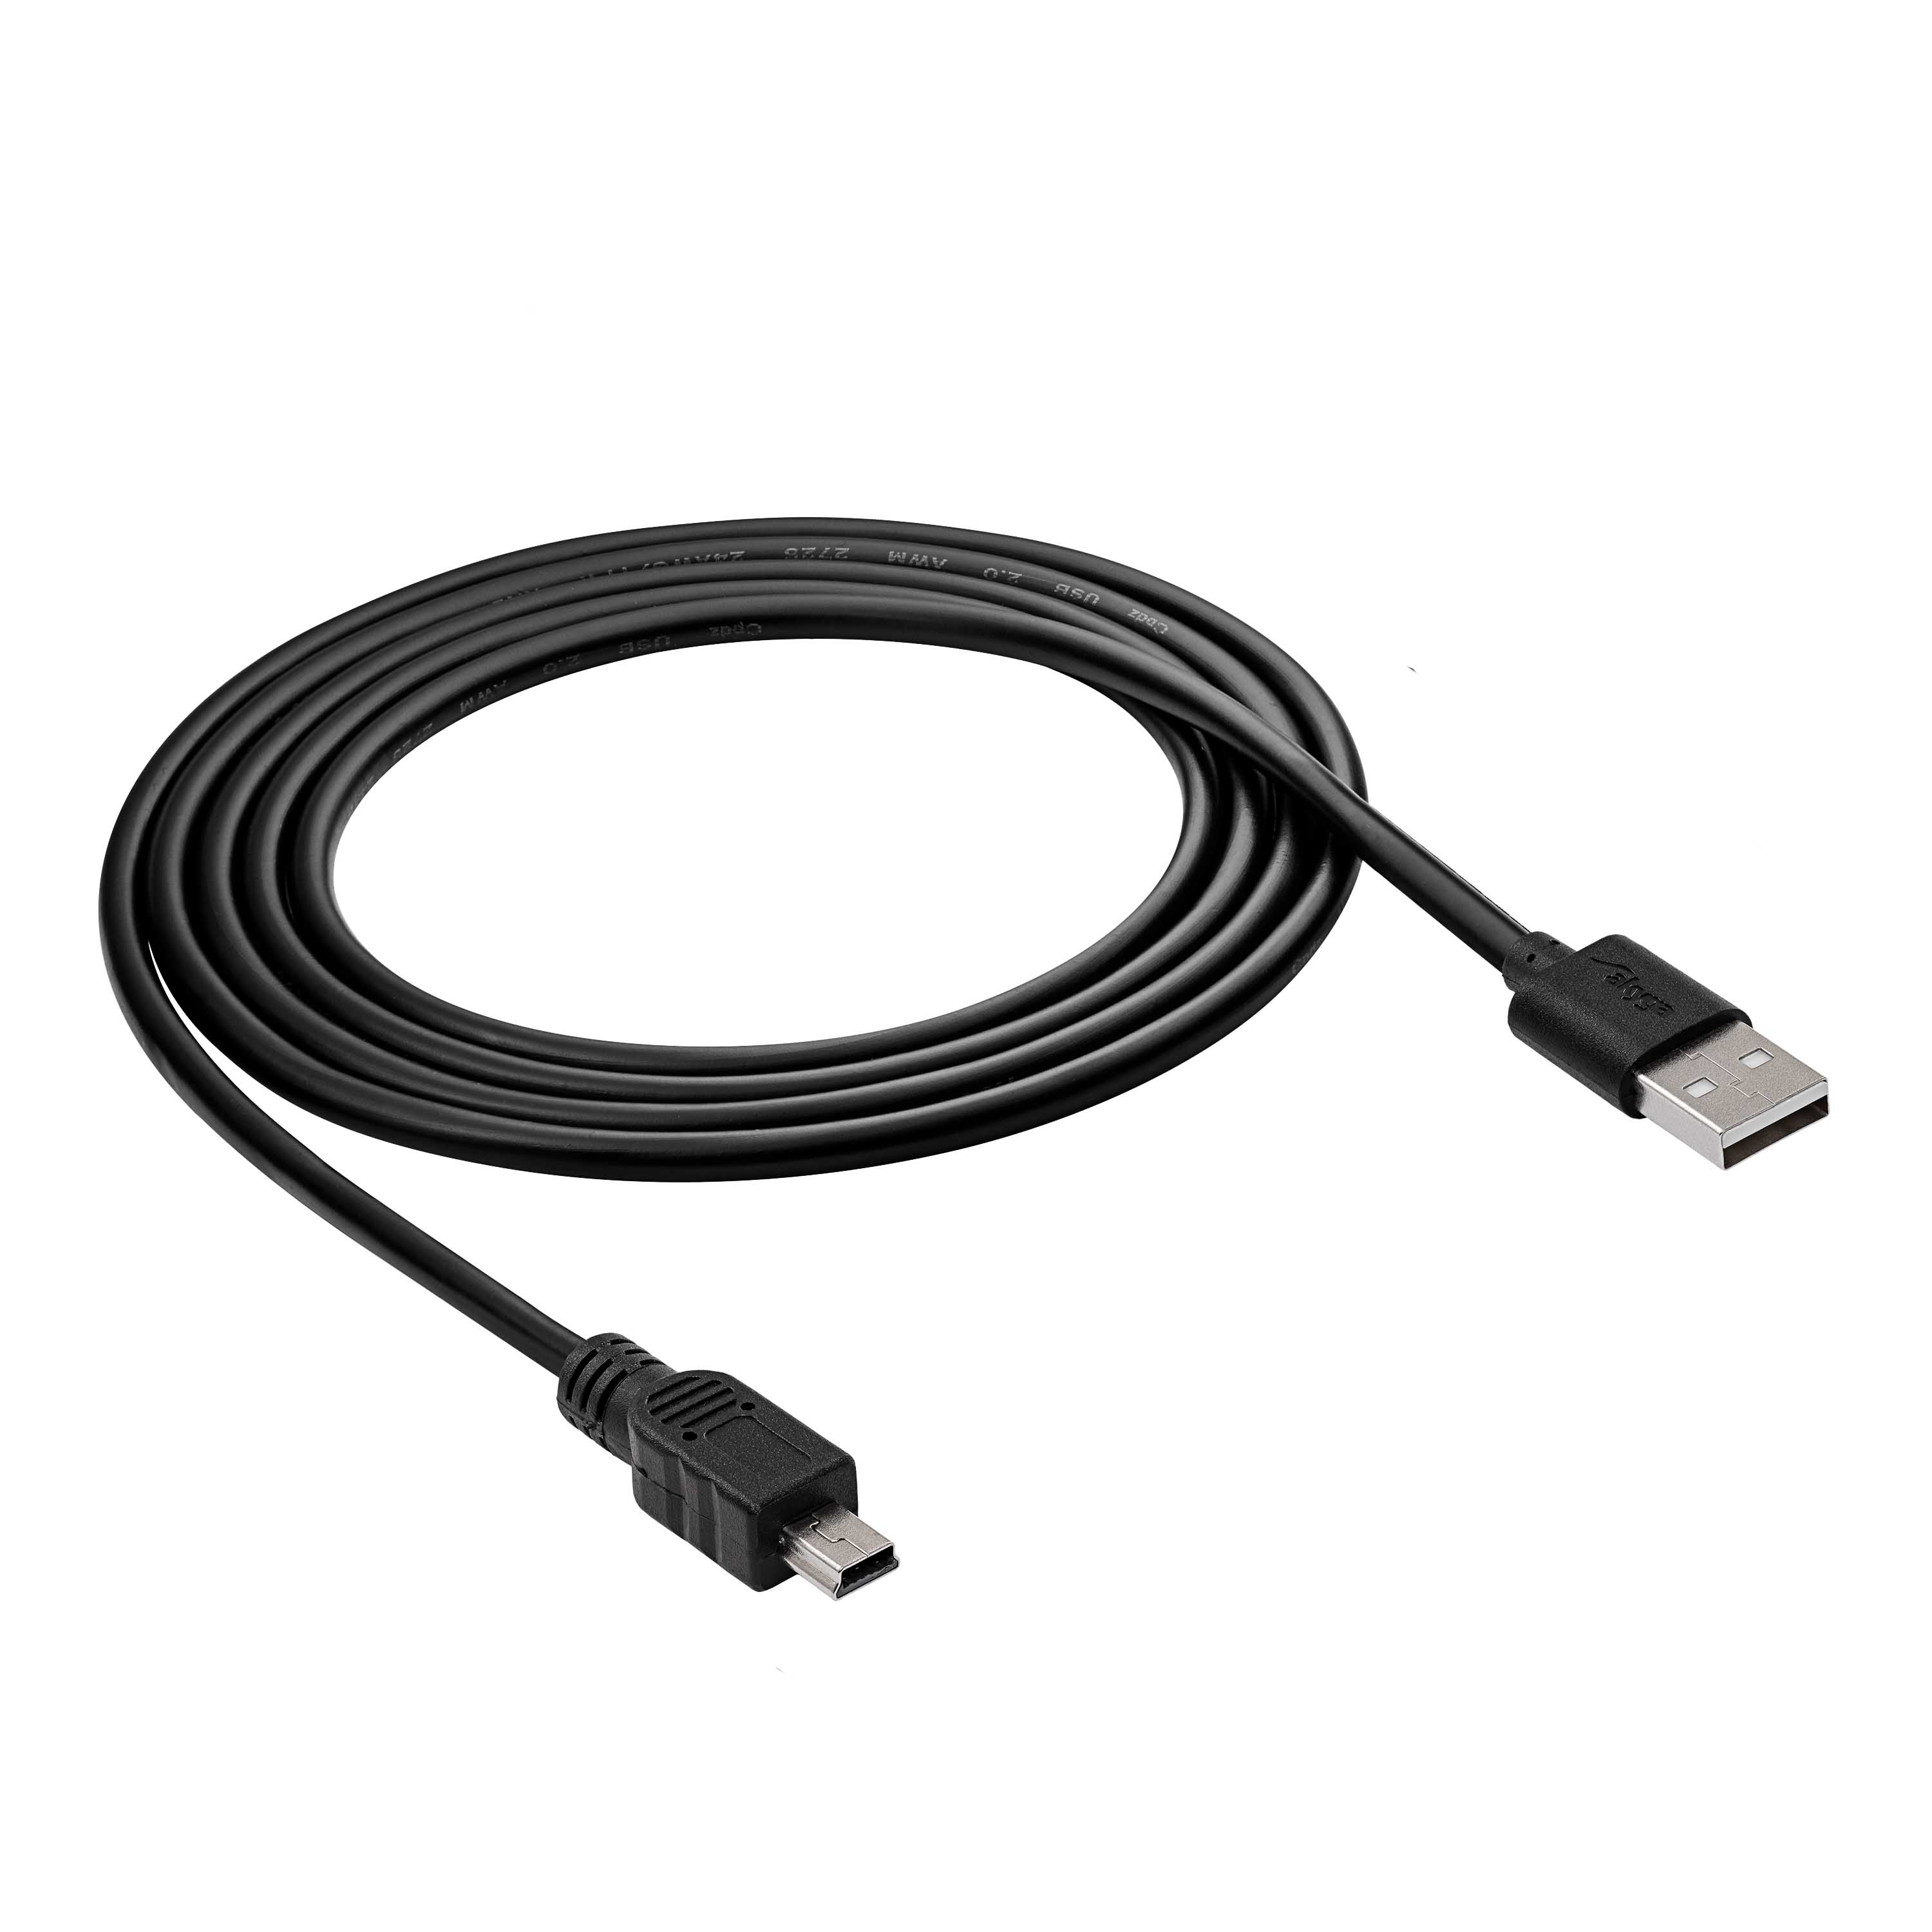 Cable USB A / USB Mini 5-pin 1.8m